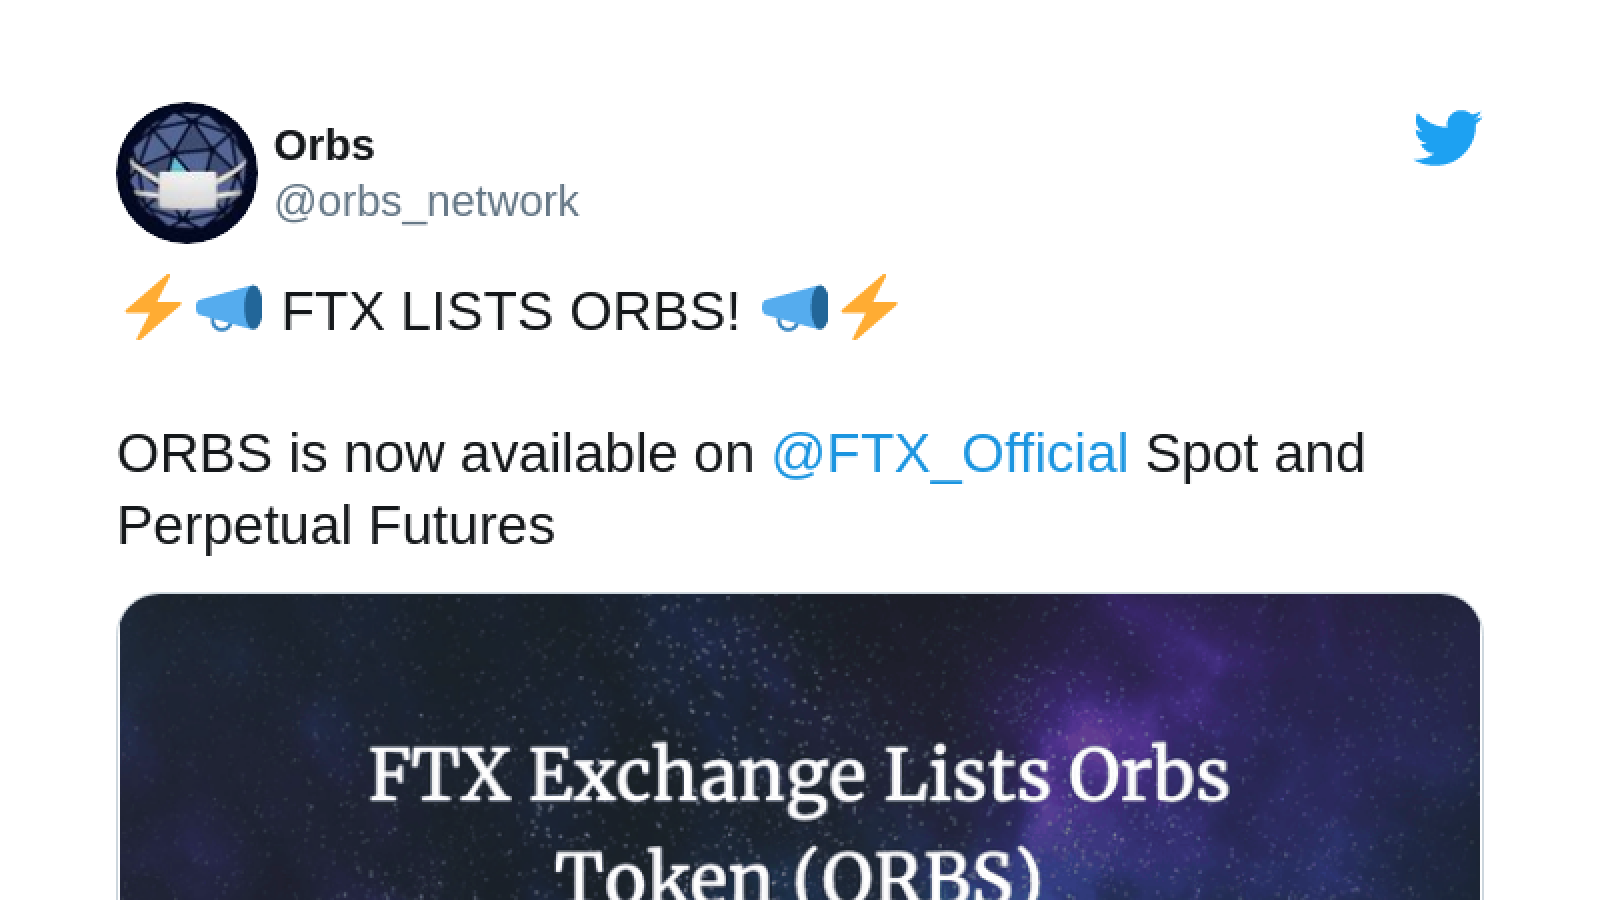 FTX lists ORBS token